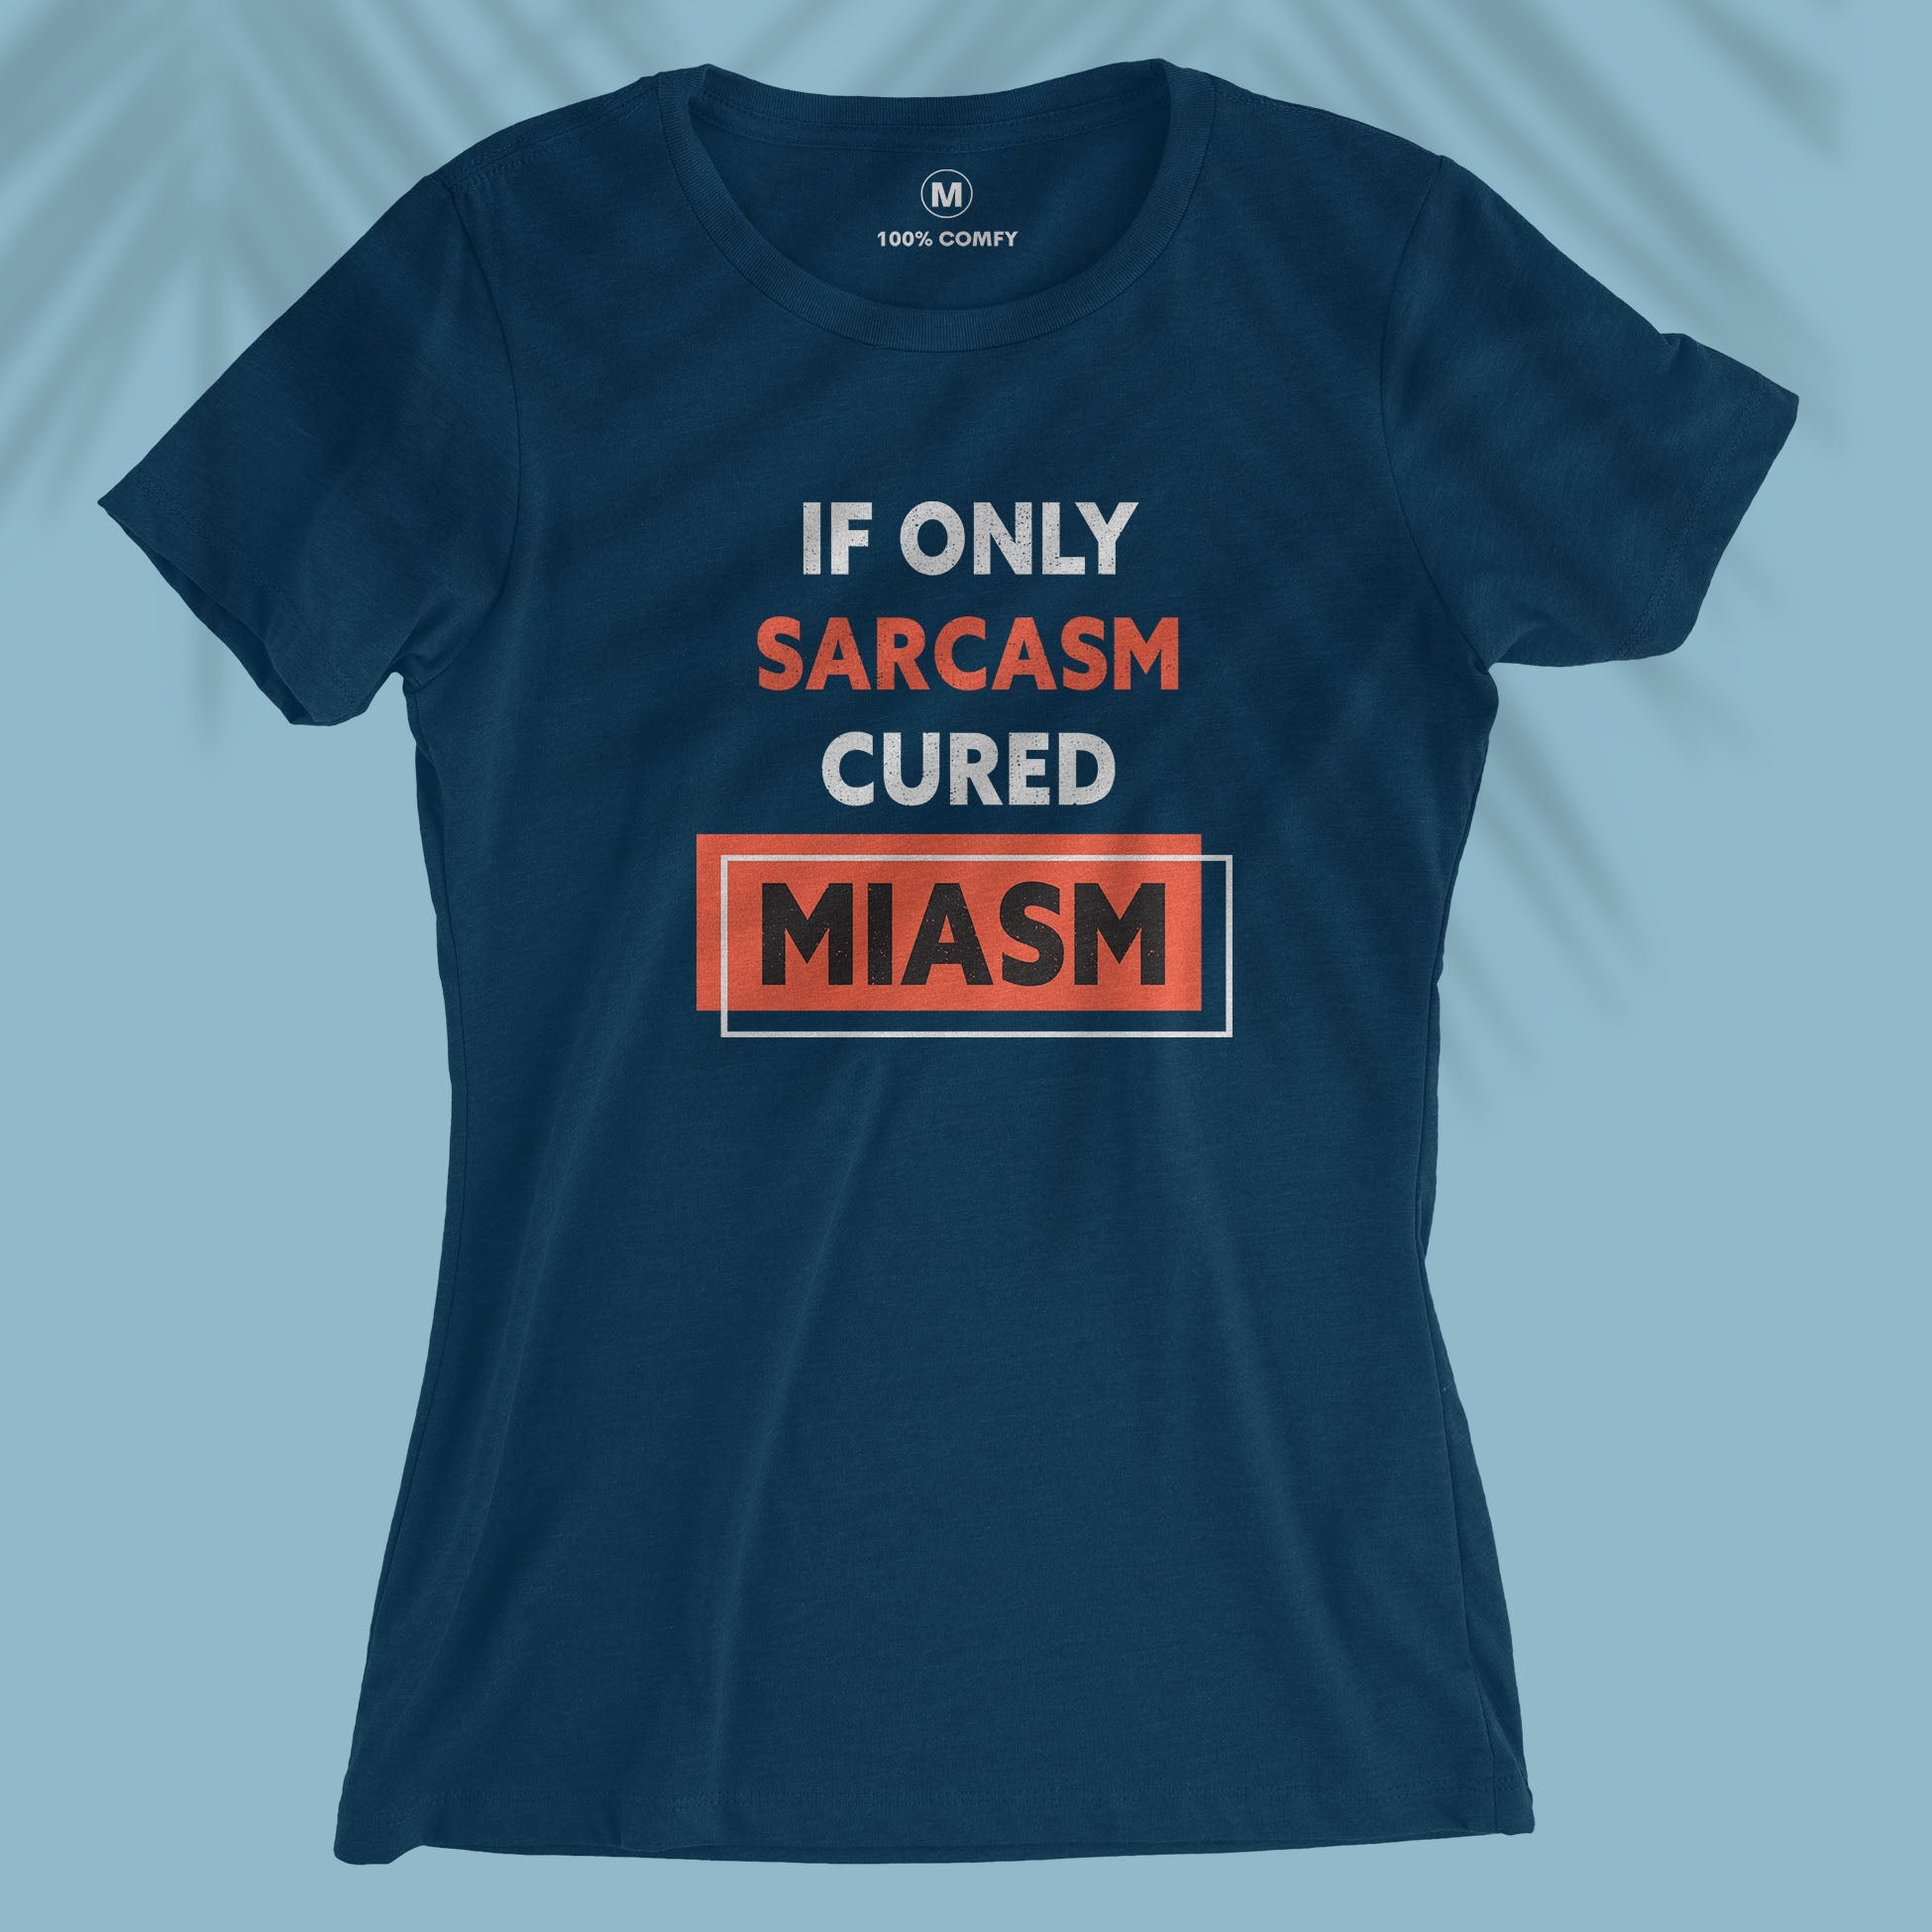 Miasm - Women T-shirt